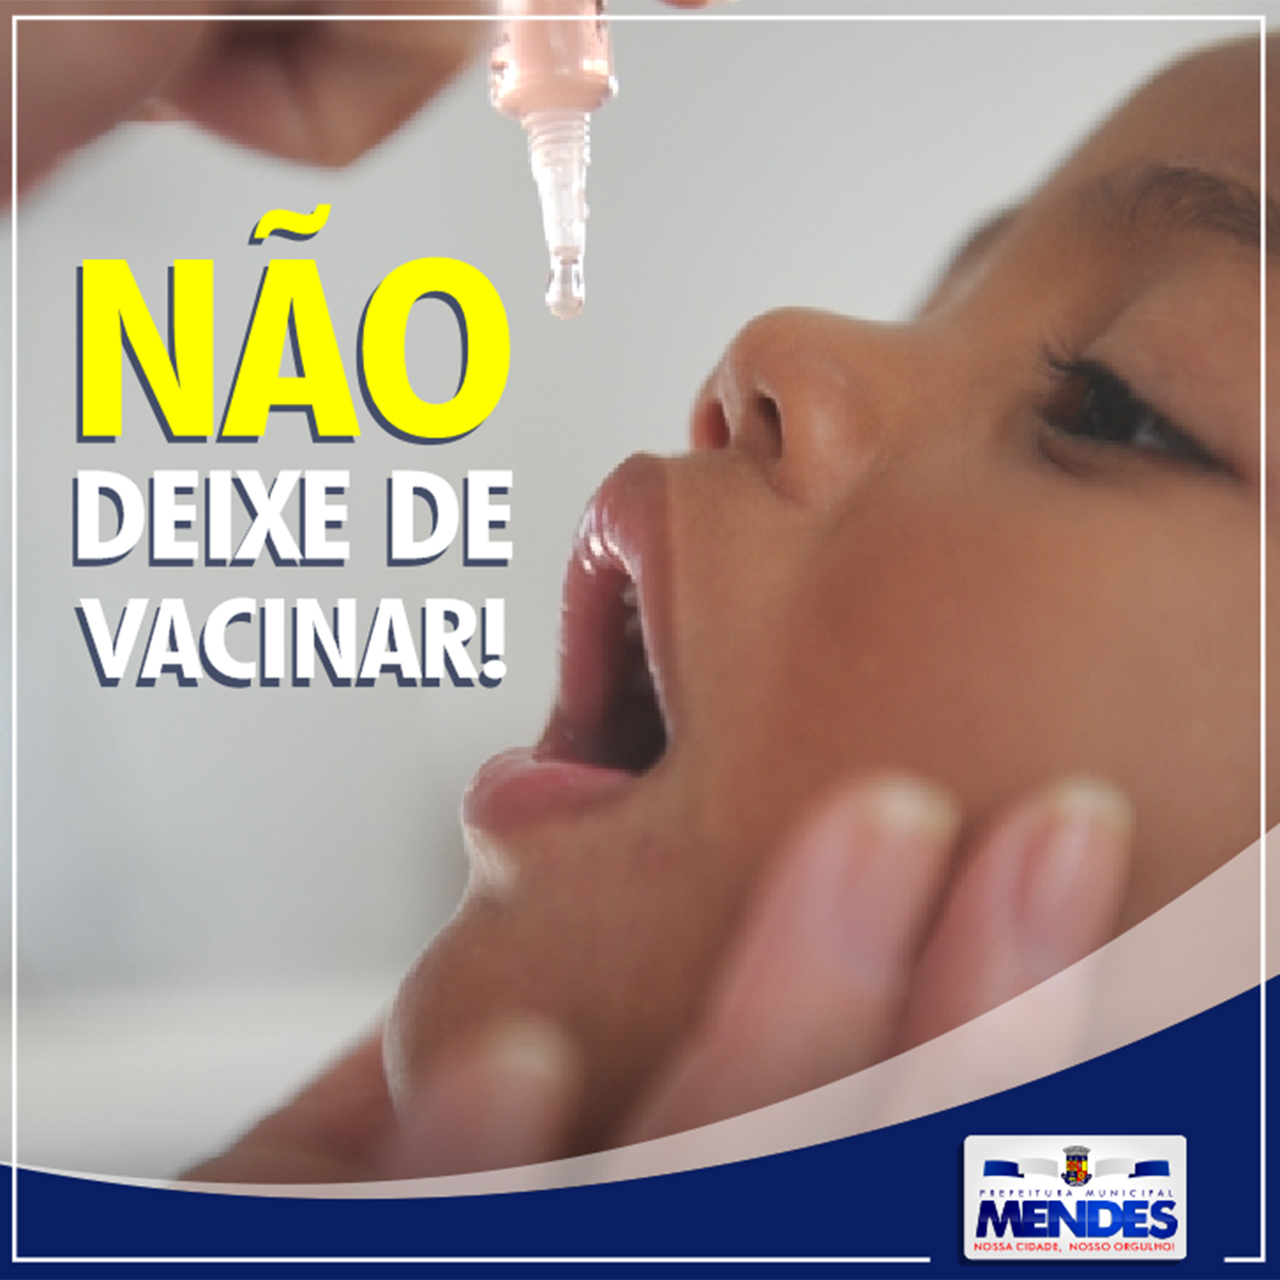 /Uploads/Images/nao_deixe_de_vacinar.jpg